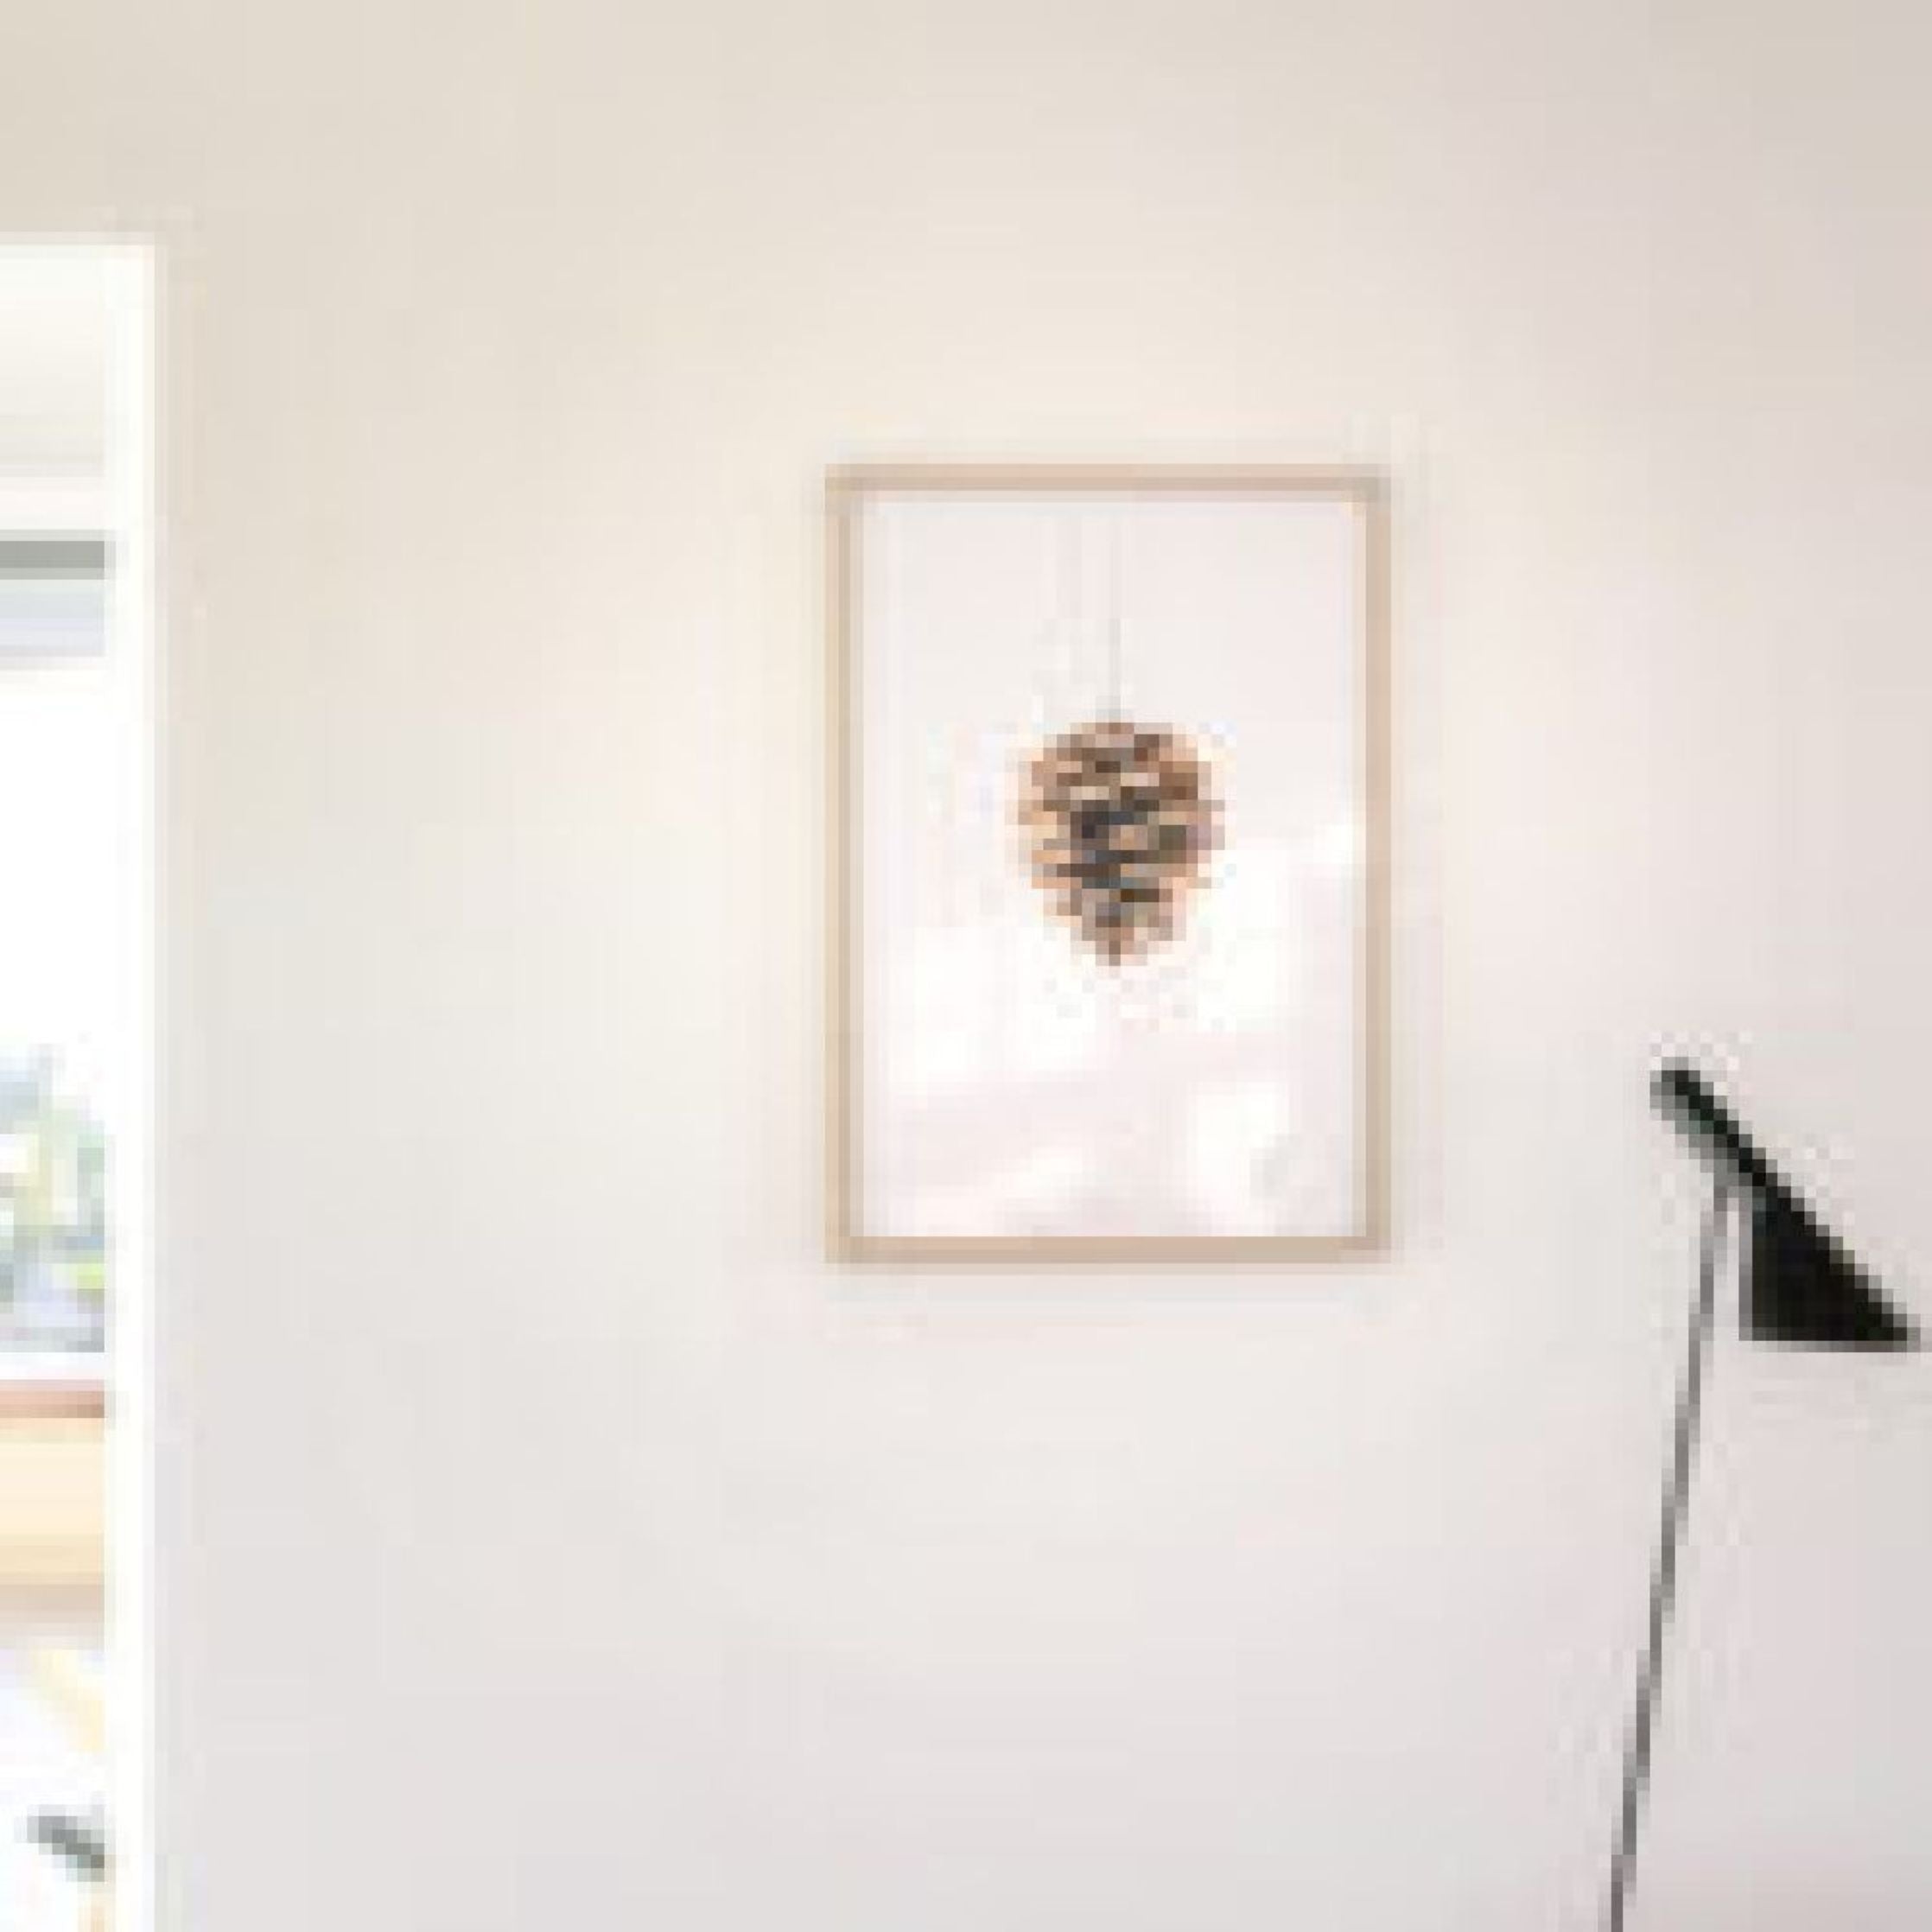 Brainchild Pine Cone Classic Poster, ram gjord av lätt trä A5, vit bakgrund